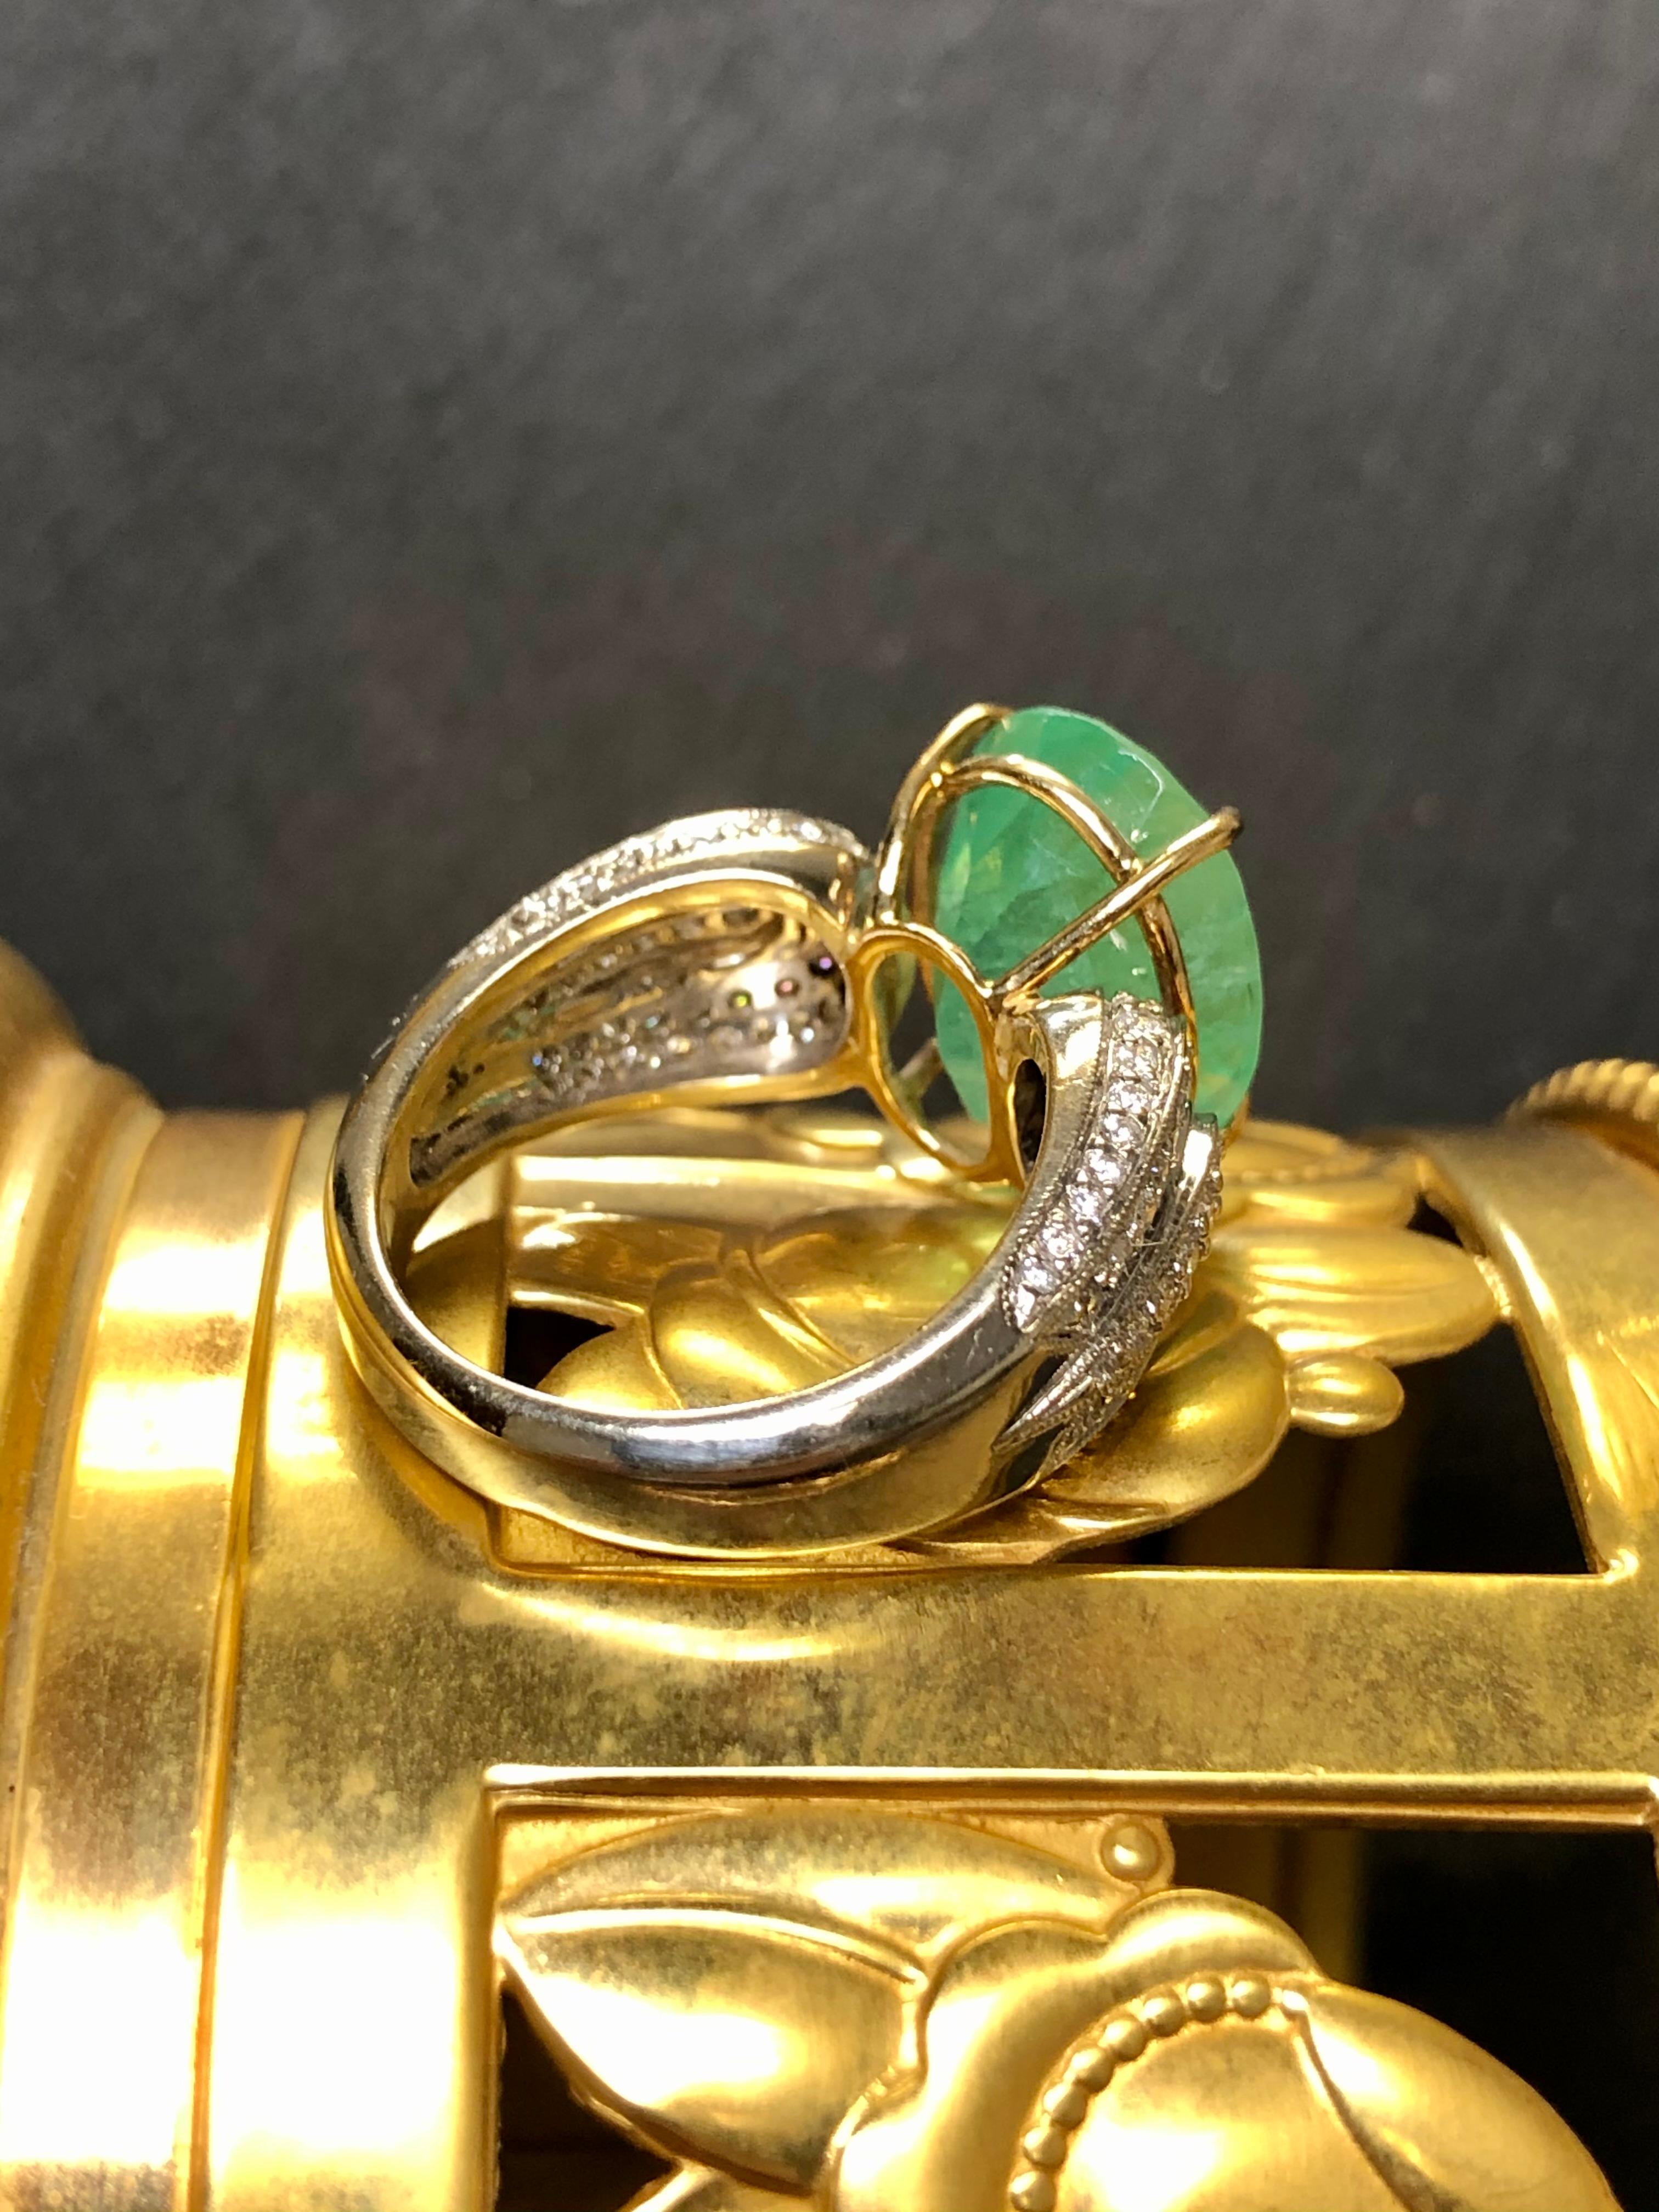 Emerald Cut Estate 14K LARGE Oval Emerald Diamond Cocktail Ring Sz 7.25 9.24cttw For Sale